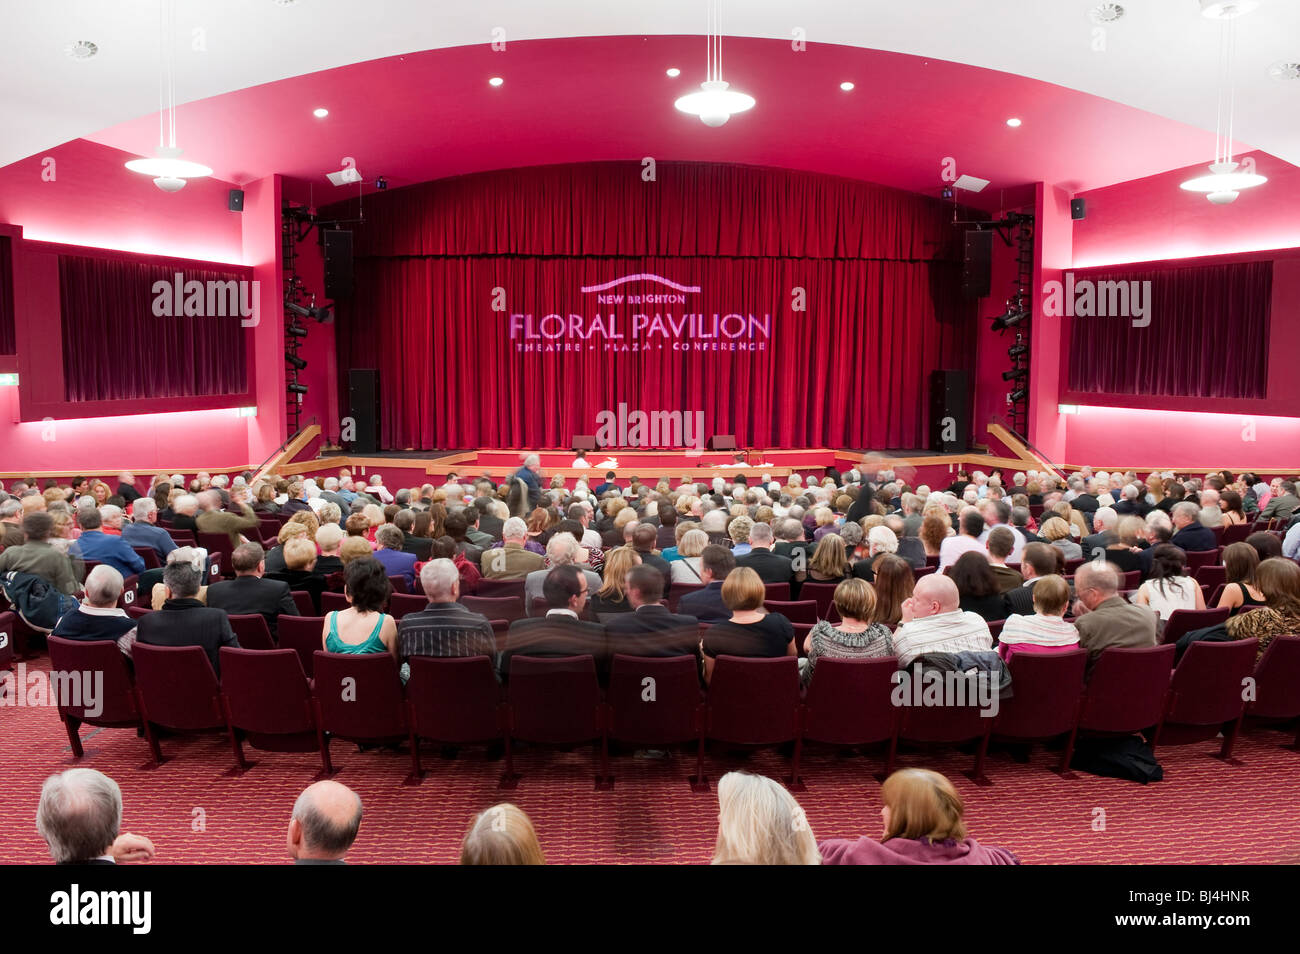 Floral Pavilion theatre auditorium with audience Stock Photo